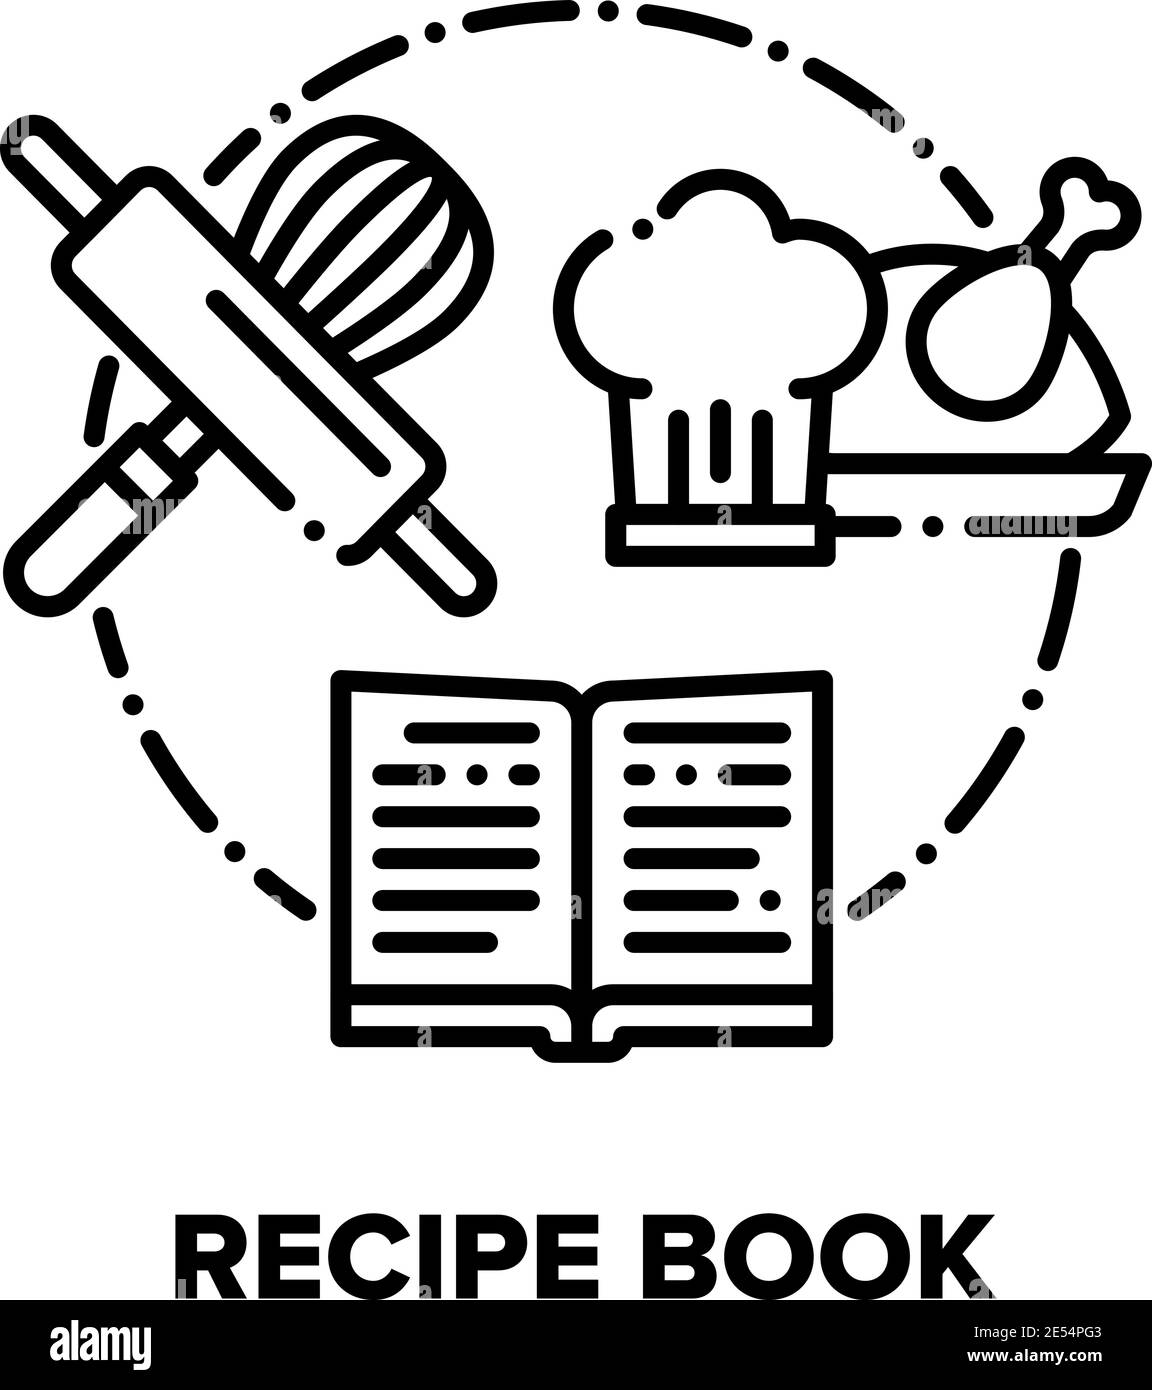 recipe-book-vector-concept-black-illustrations-stock-vector-image-art